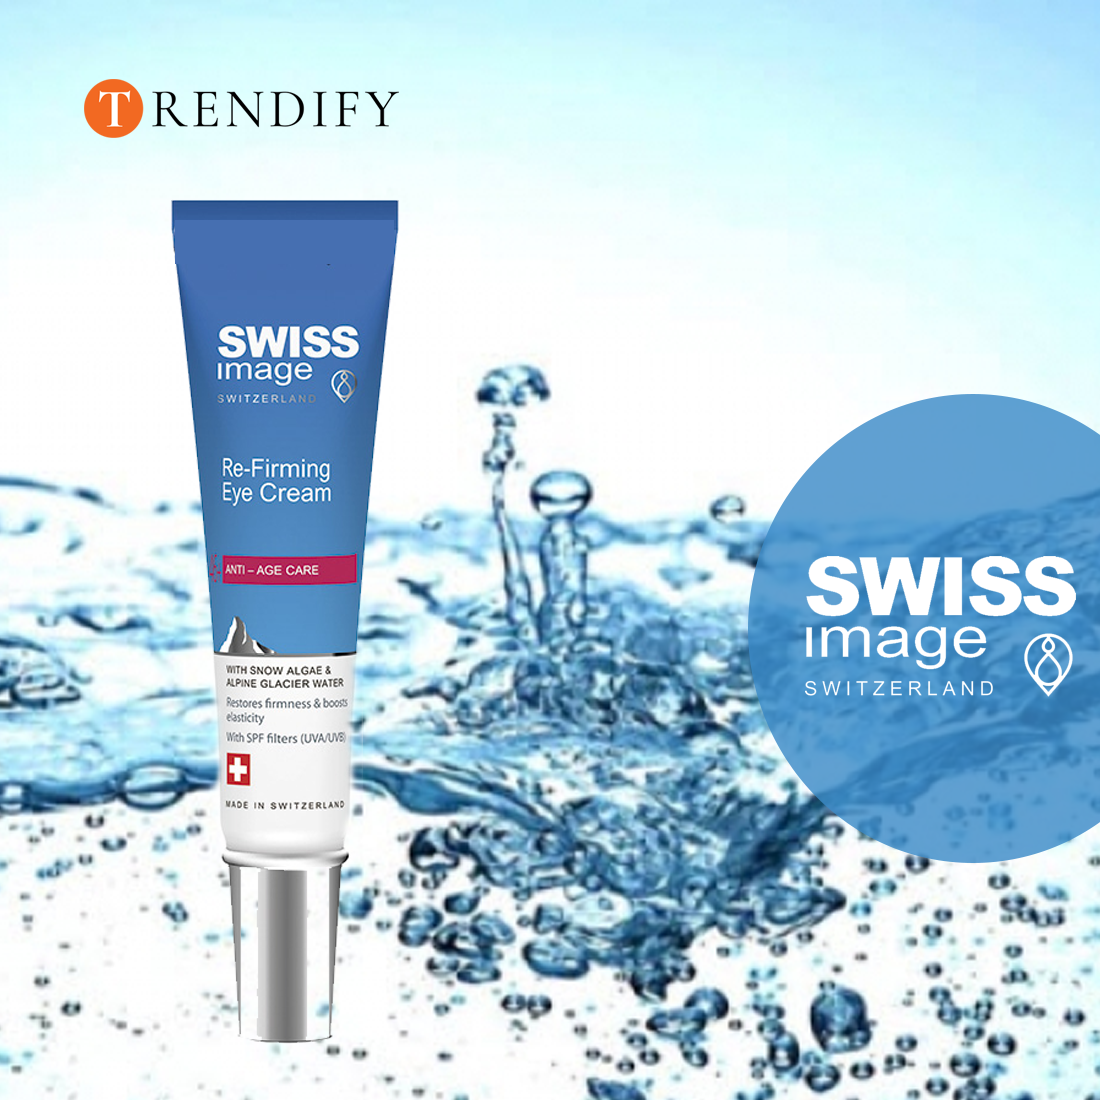 Swiss image trendify swiss image